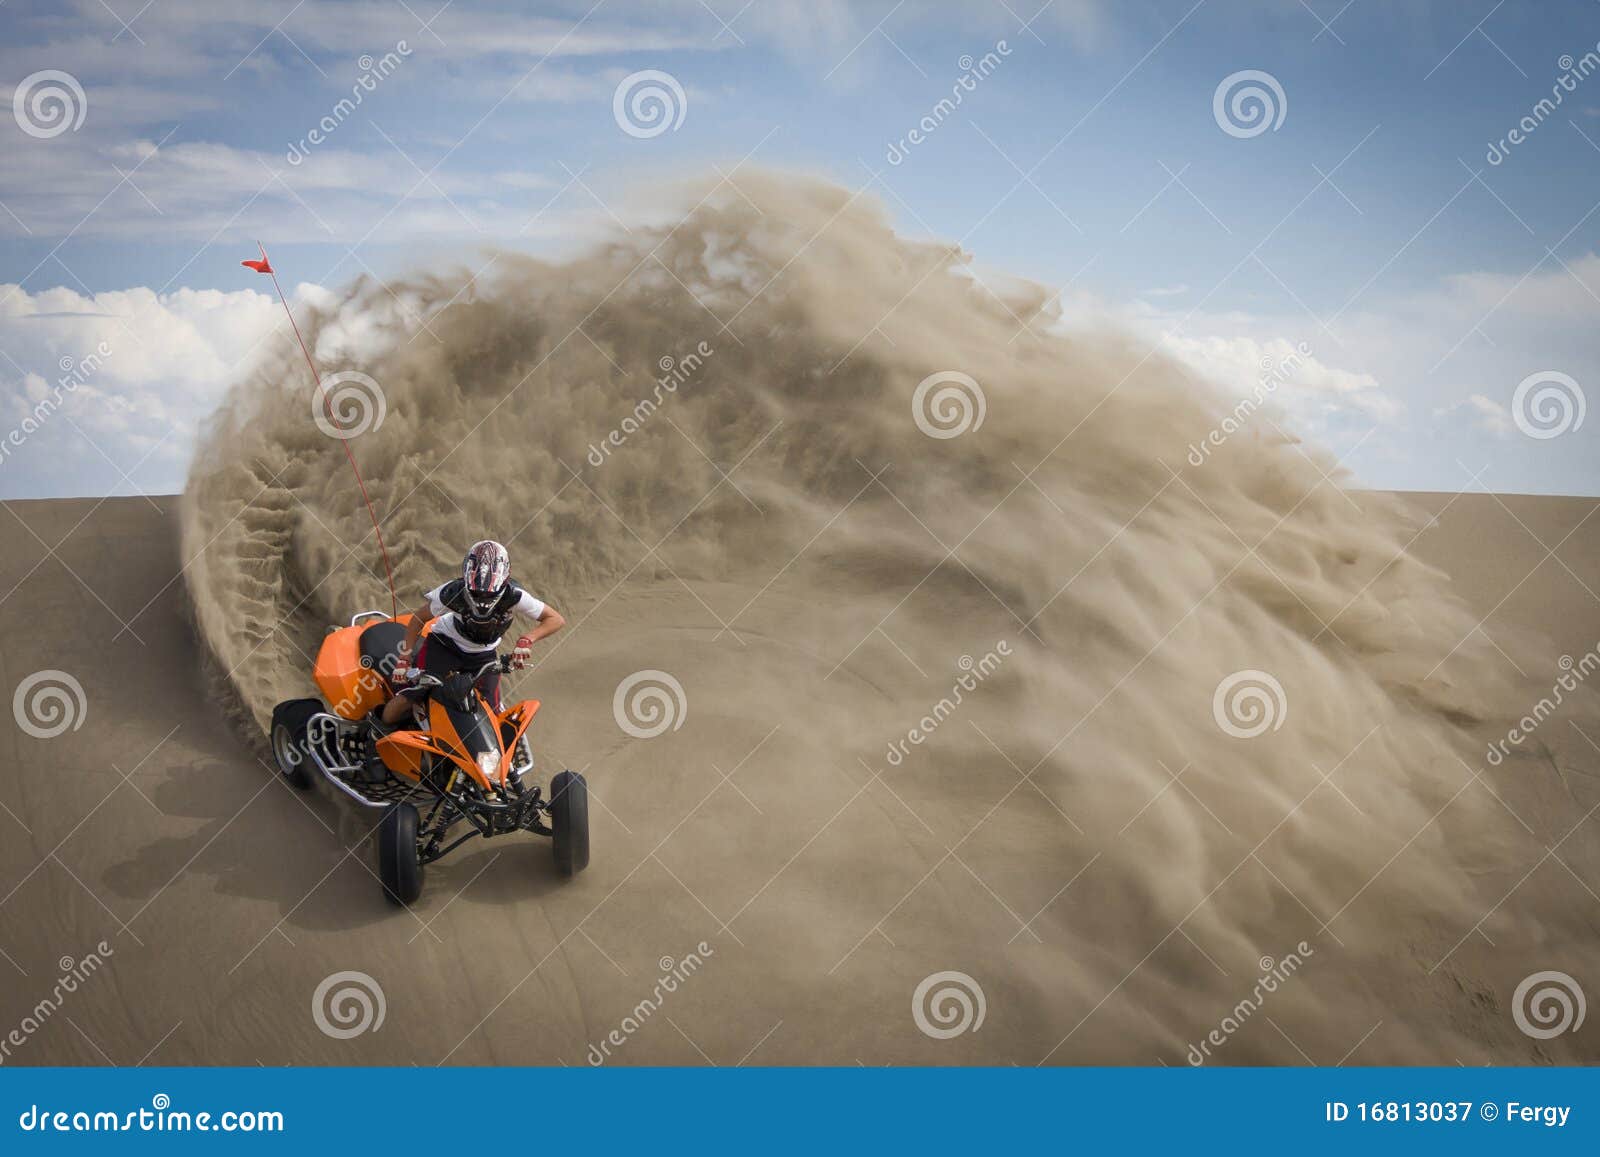 quad rider in sand dunes roost